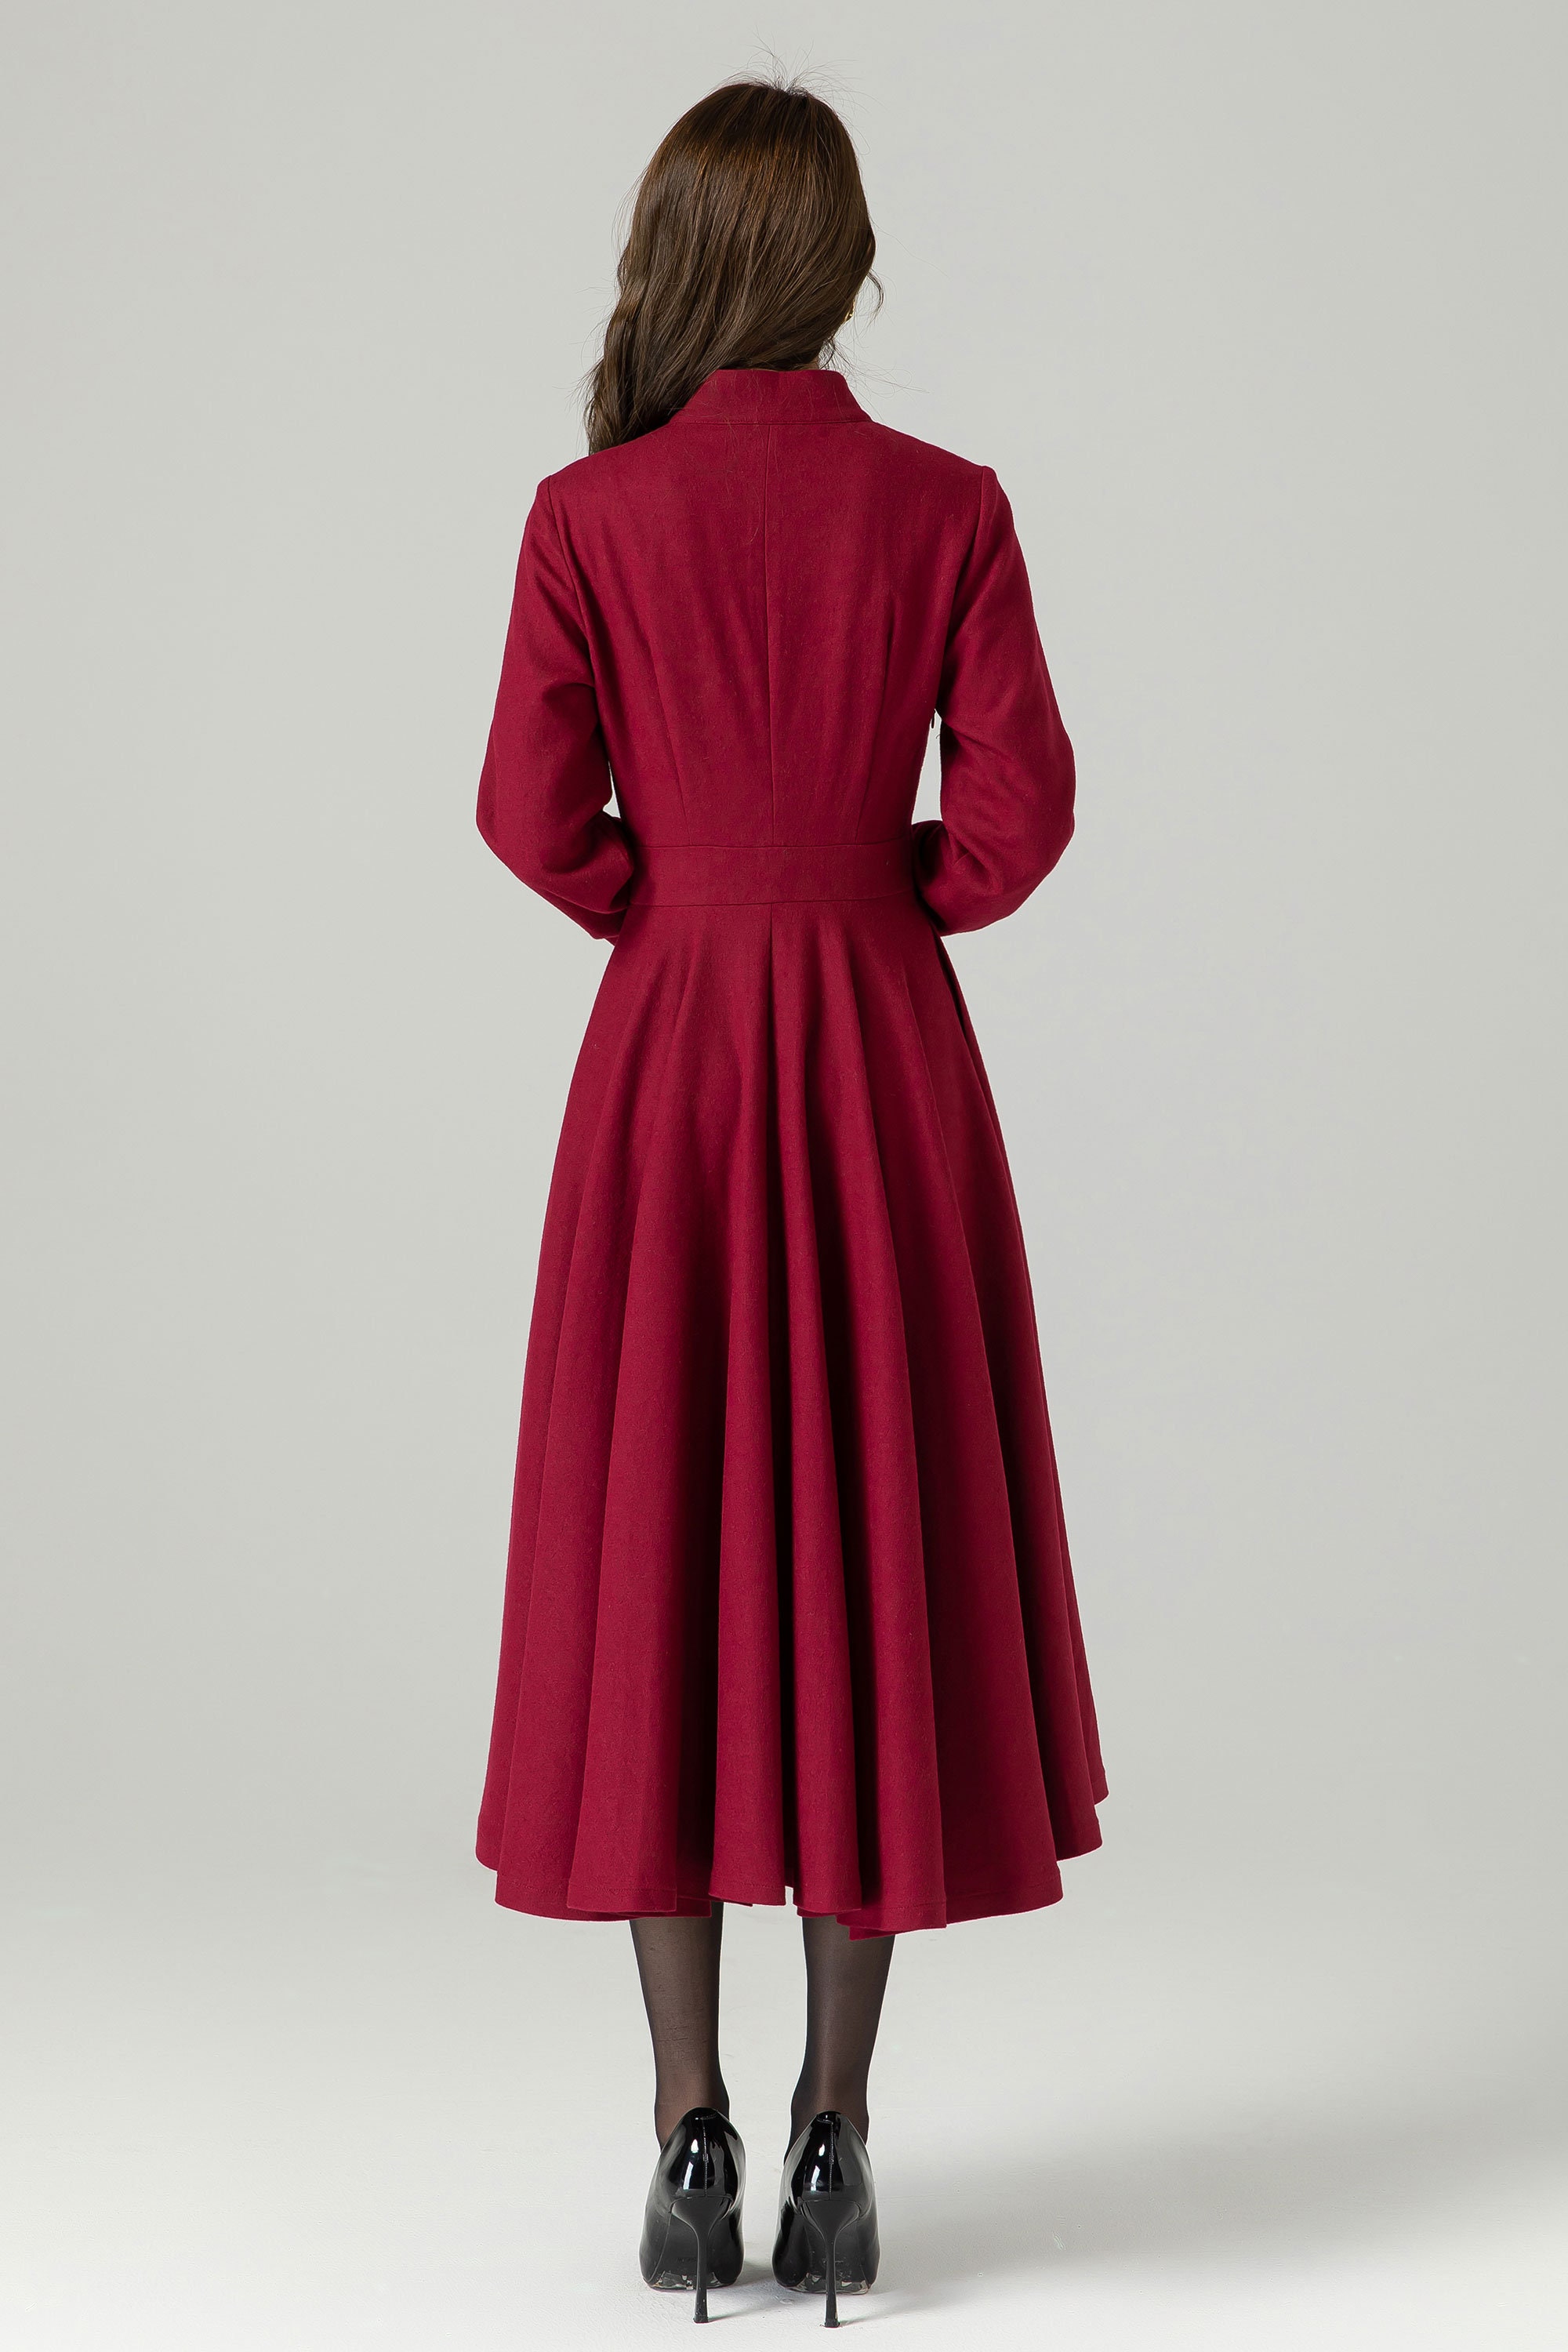 Vintage Inspired Winter Wool Dress Women, Mandarin Collar Wool Dress,  A-line Green Wool Dress, Retro Swing Long Dress, Xiaolizi 1621 -  Canada